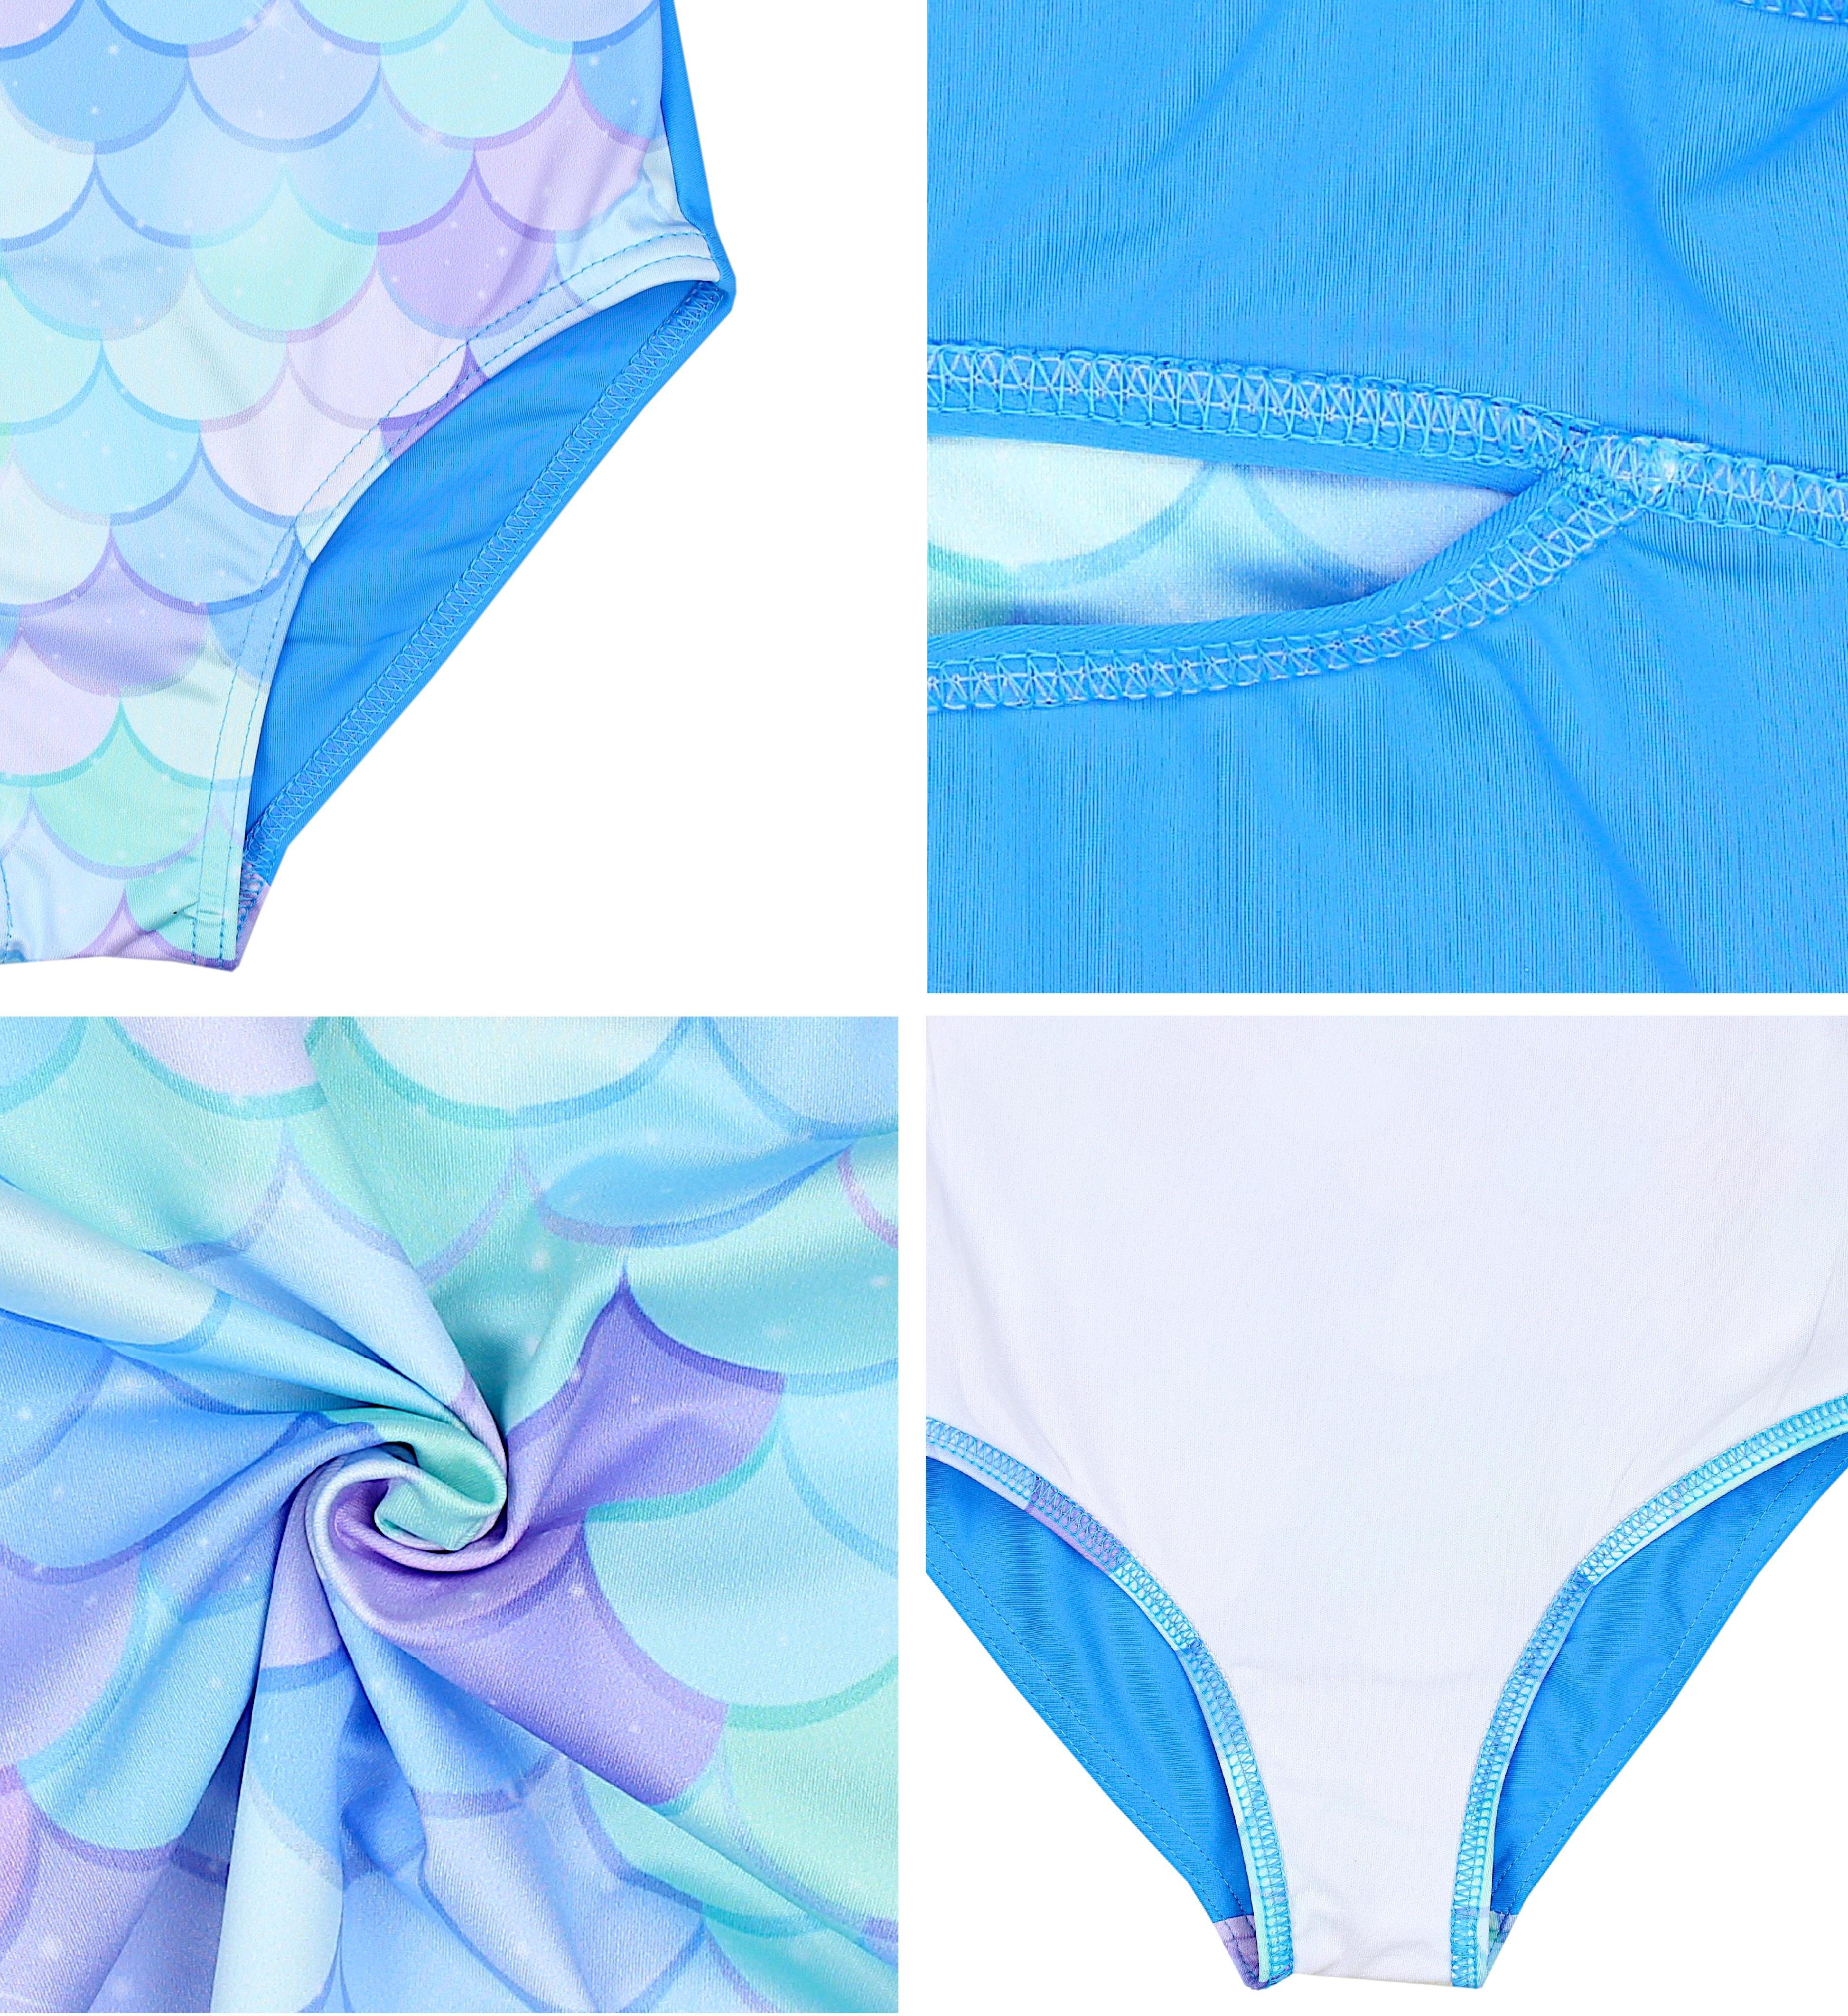 Violett Blau Mädchen Grün Badeanzug mit / Aquarti Ringerrücken / Aquarti Badeanzug Meerjungfrau Print